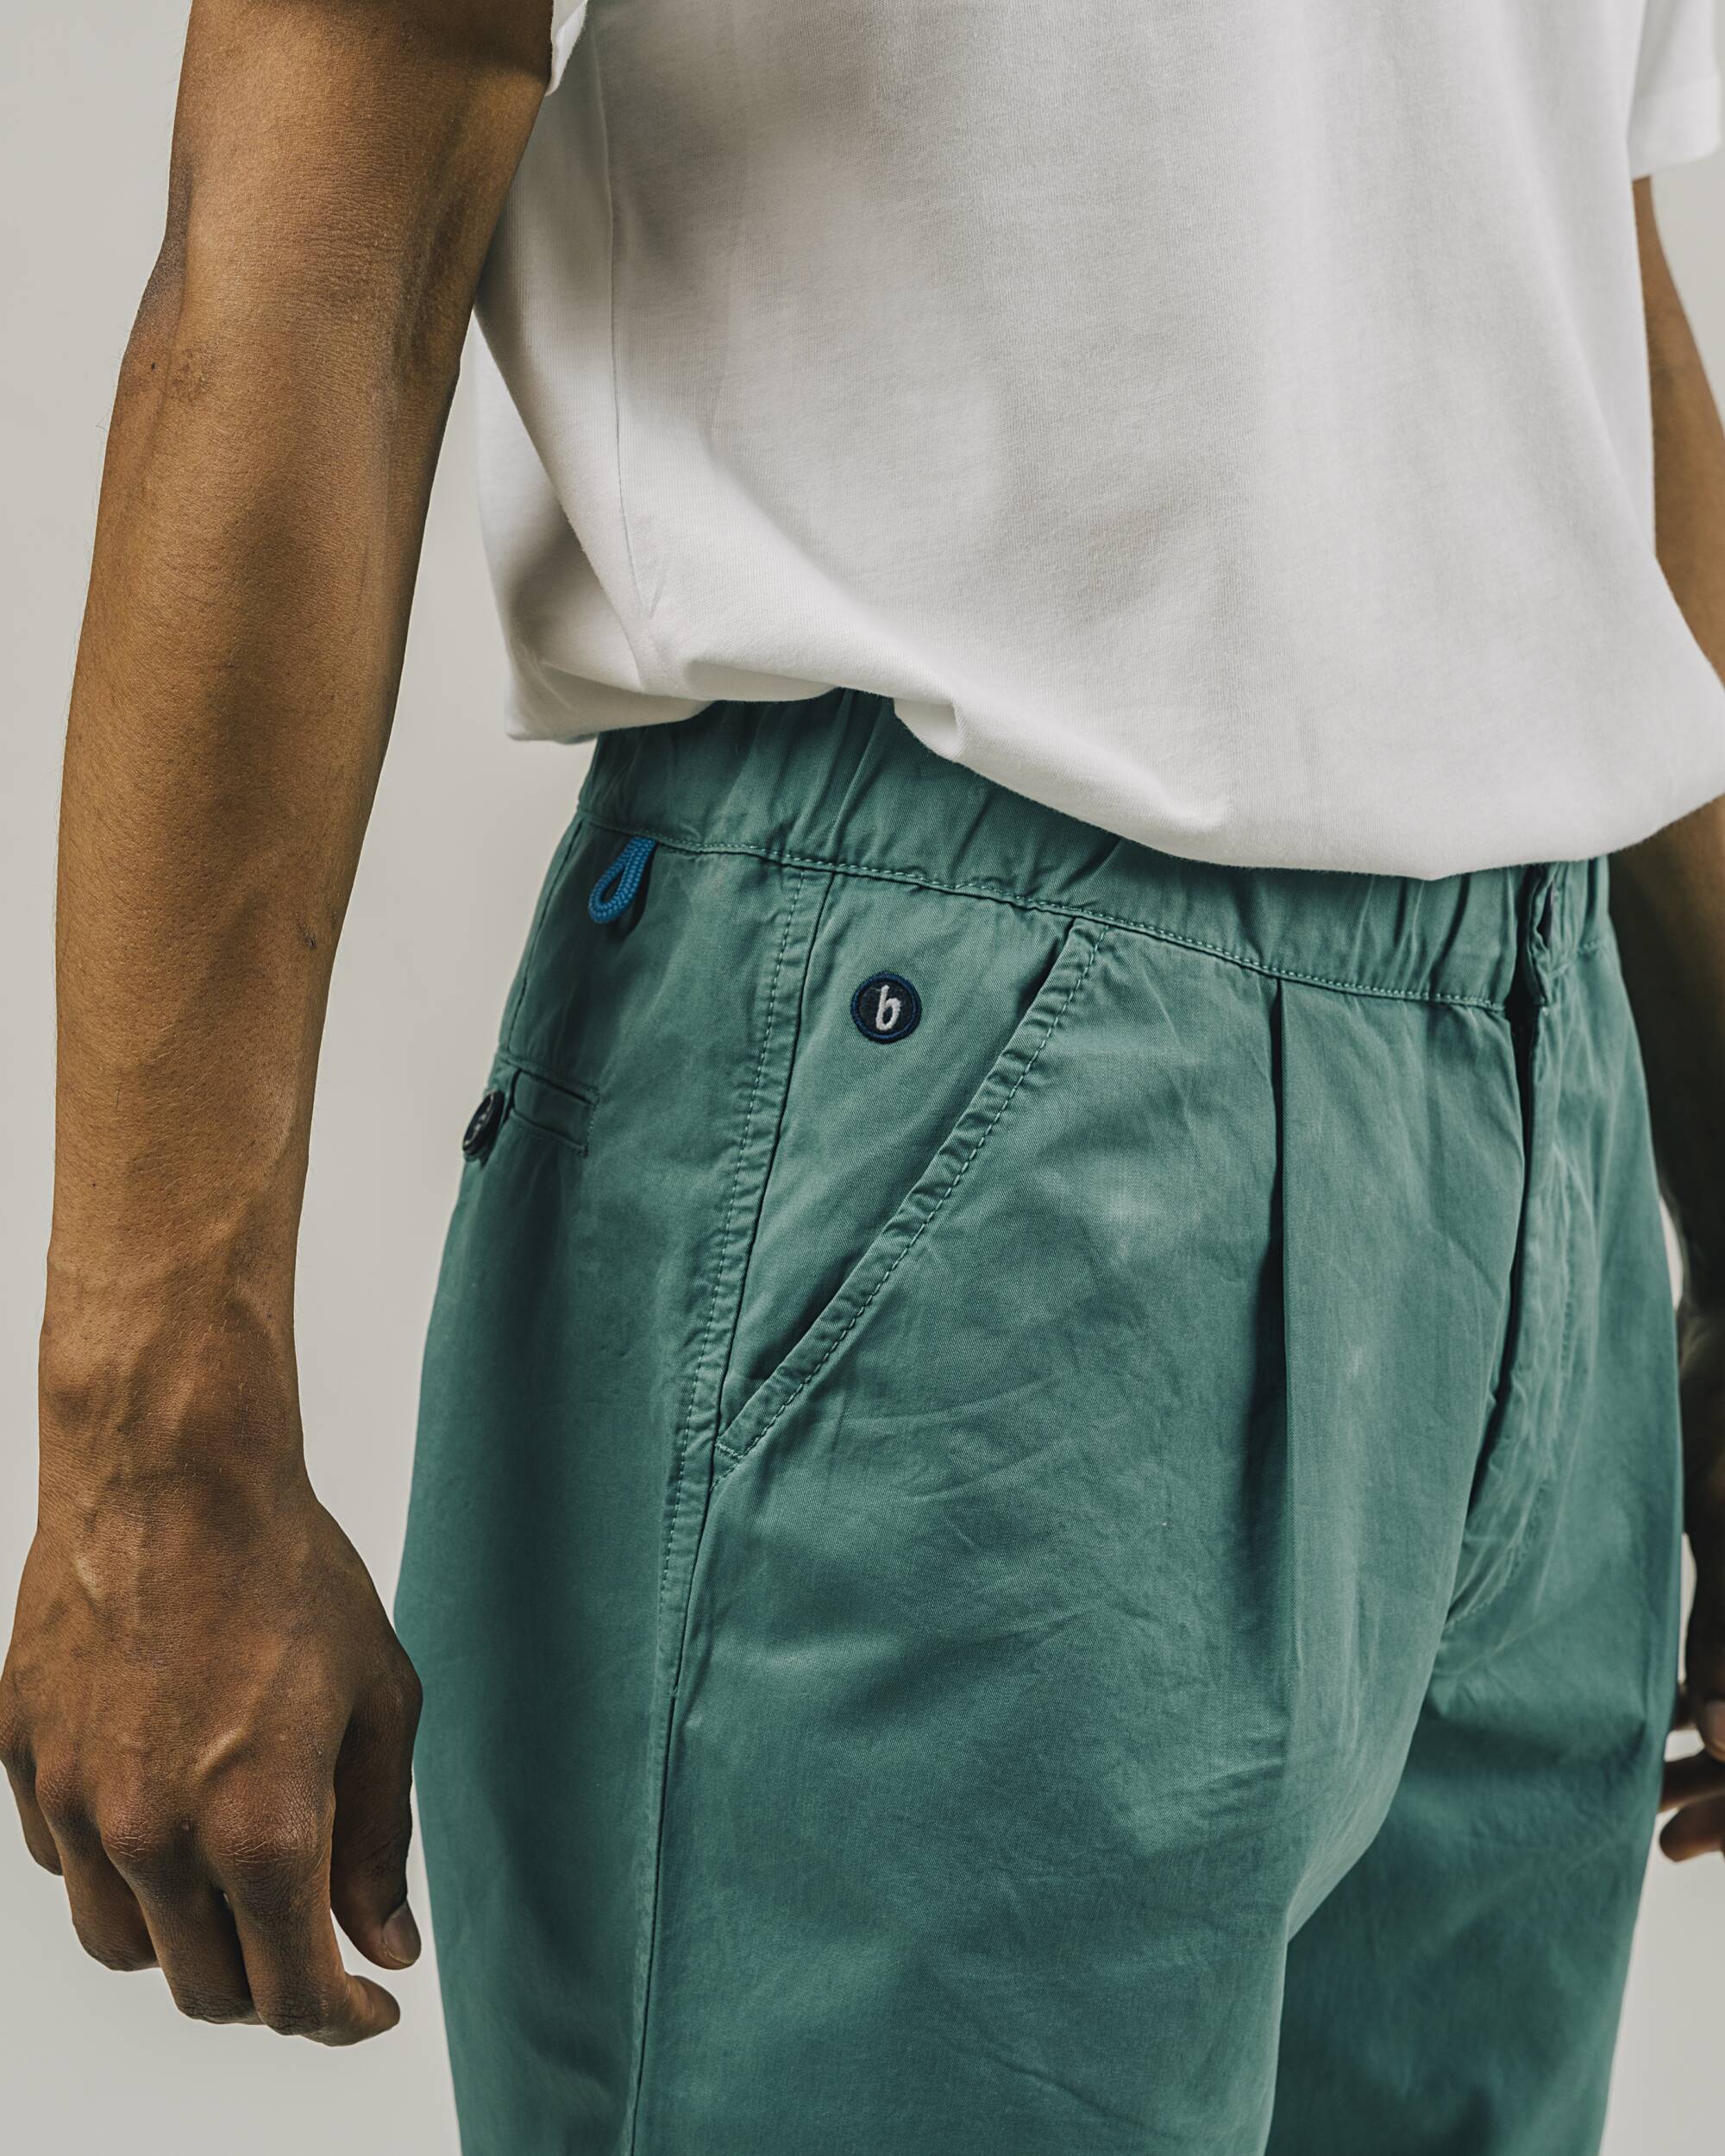 Brava Fabrics Pants Comfort Chino Jungle bæredygtig mode etisk mode